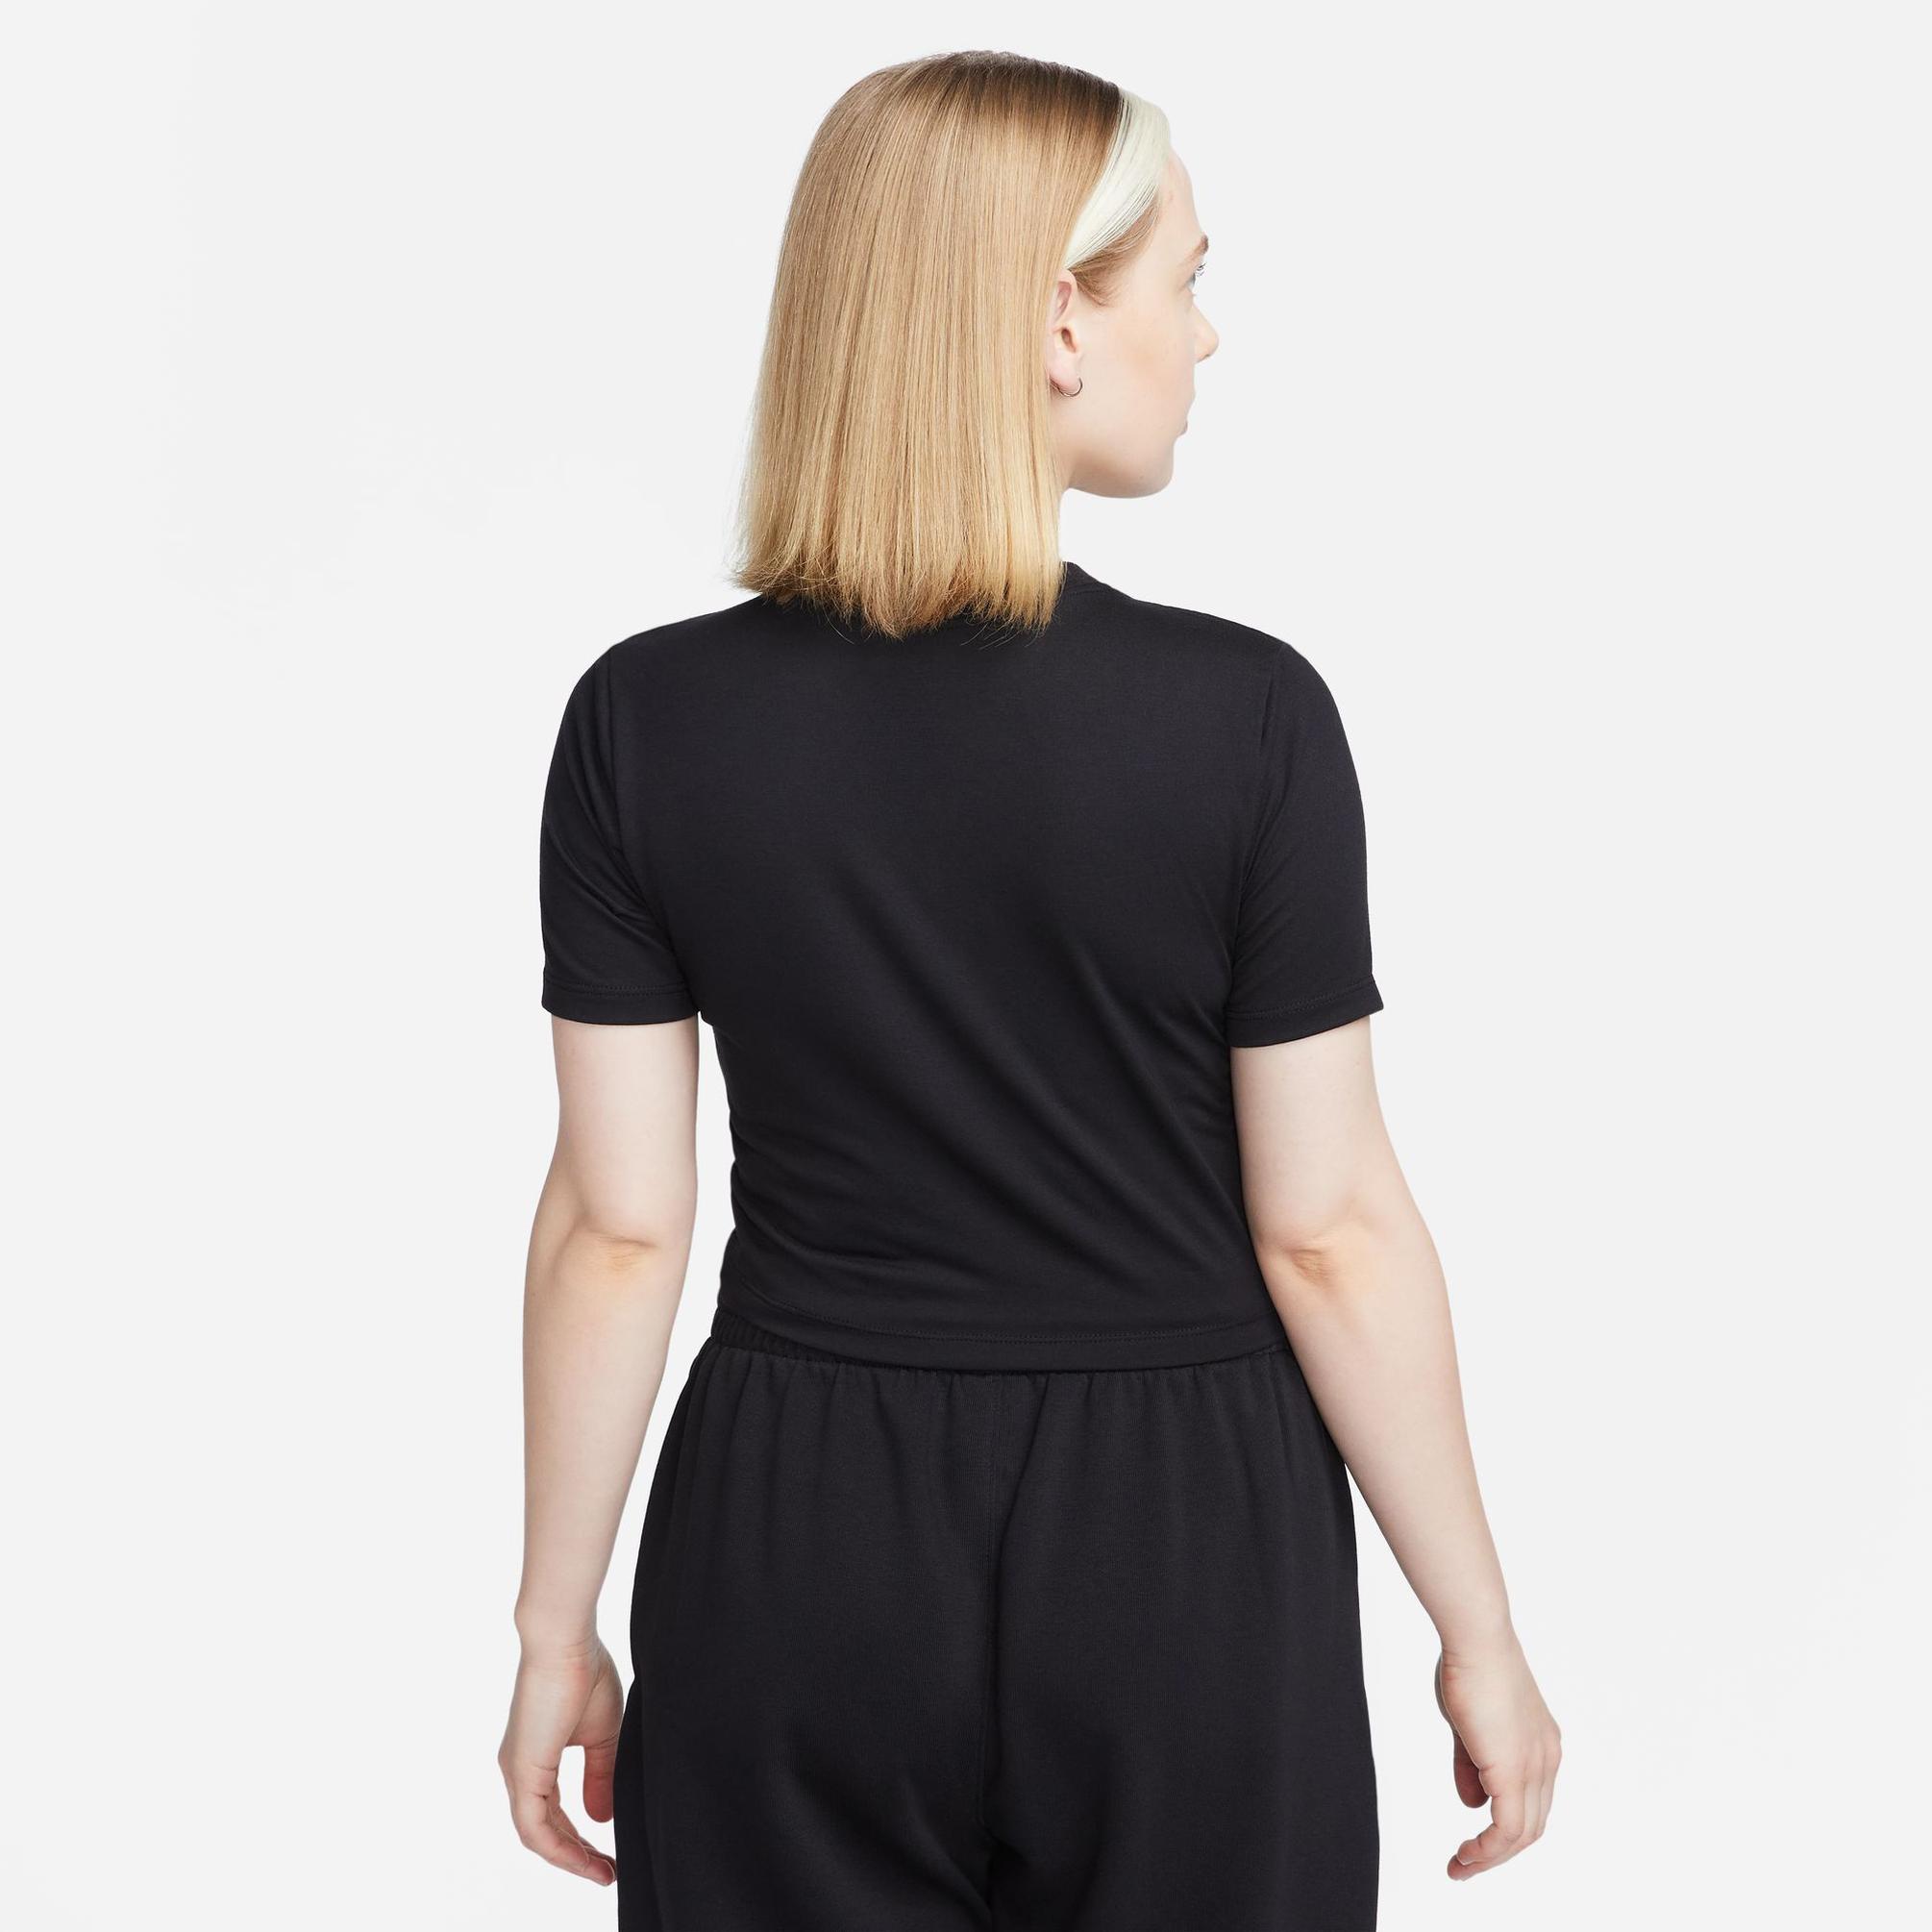  Nike Sportswear Essential Slim-Fit Crop Kadın Siyah T-Shirt